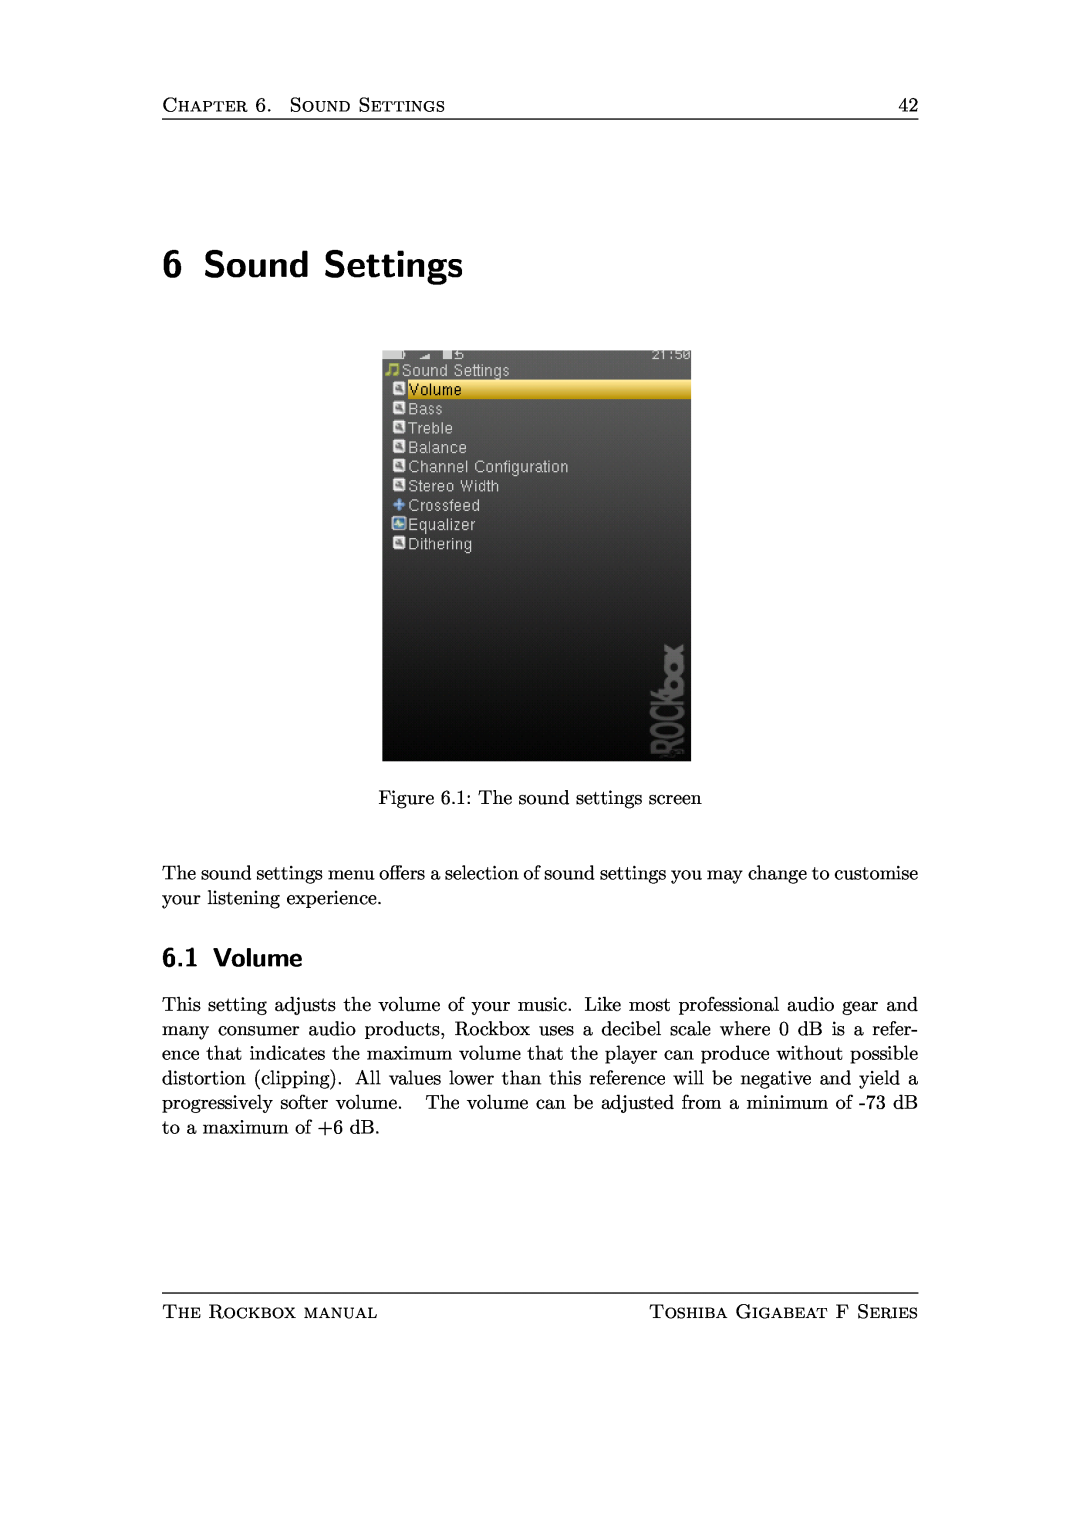 Toshiba F Series manual Sound Settings, Volume 